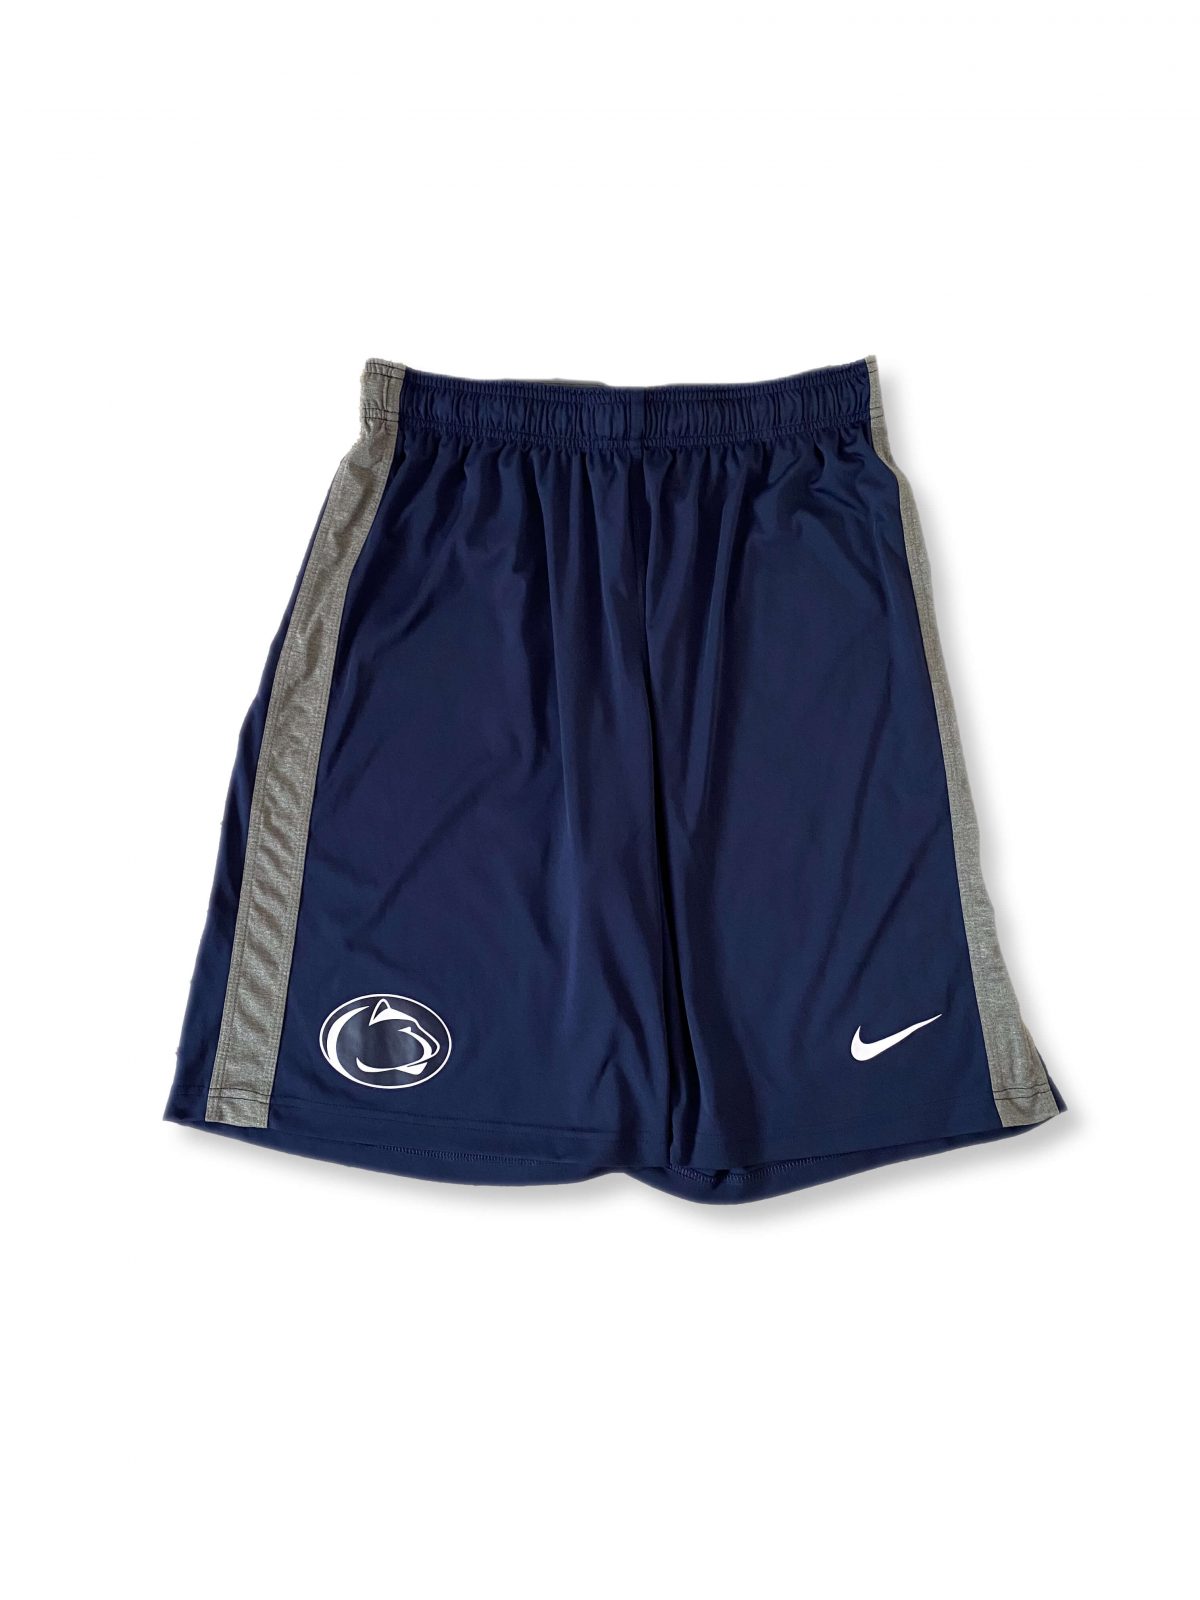 Penn State Football Shorts : NARP Clothing